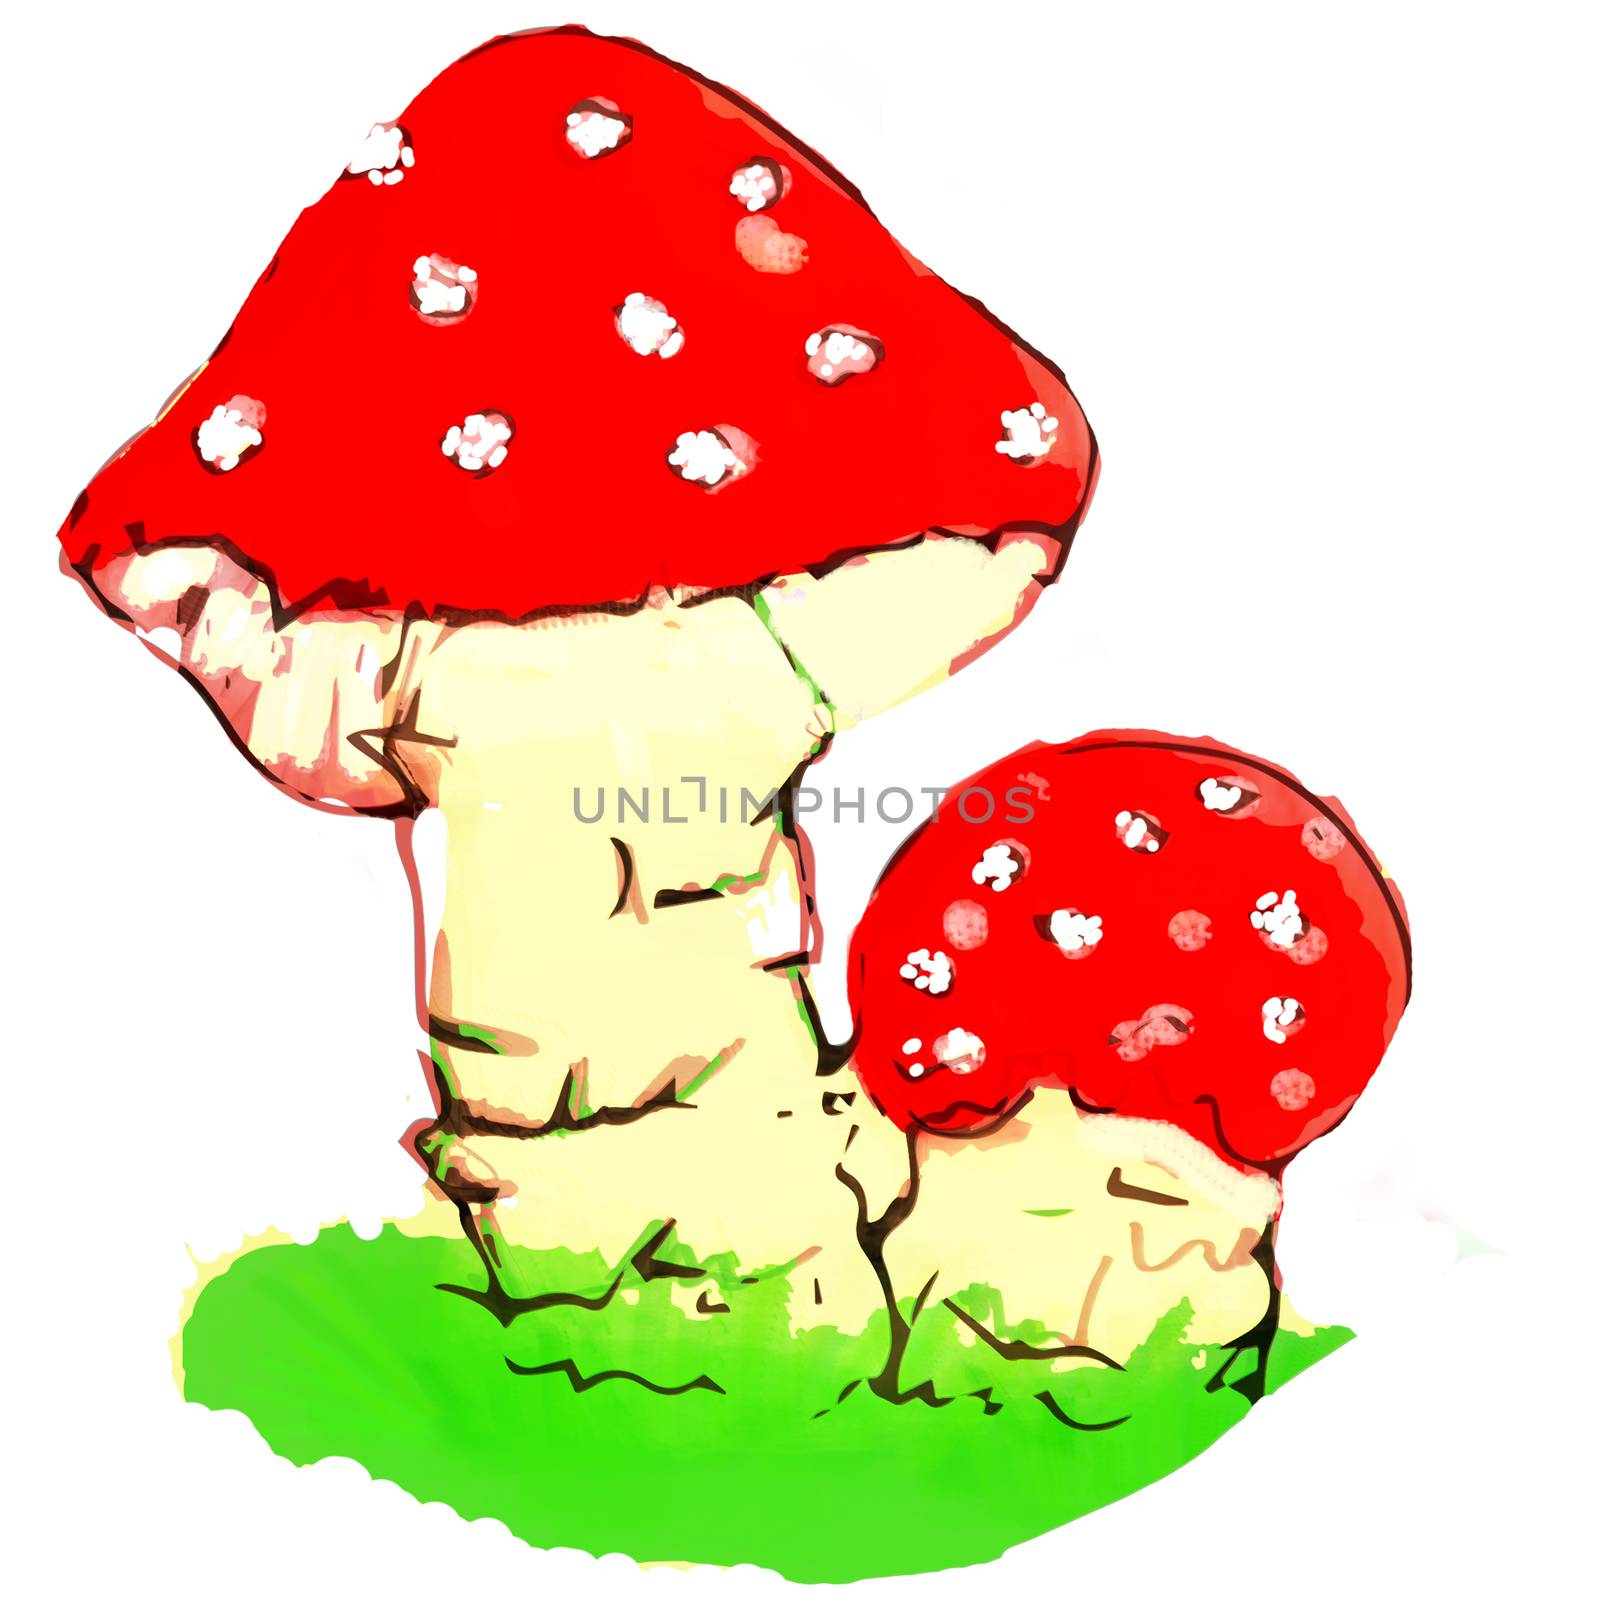 Conditionally edible mushrooms Illustration made in photoshop. by natalia_voroshilova